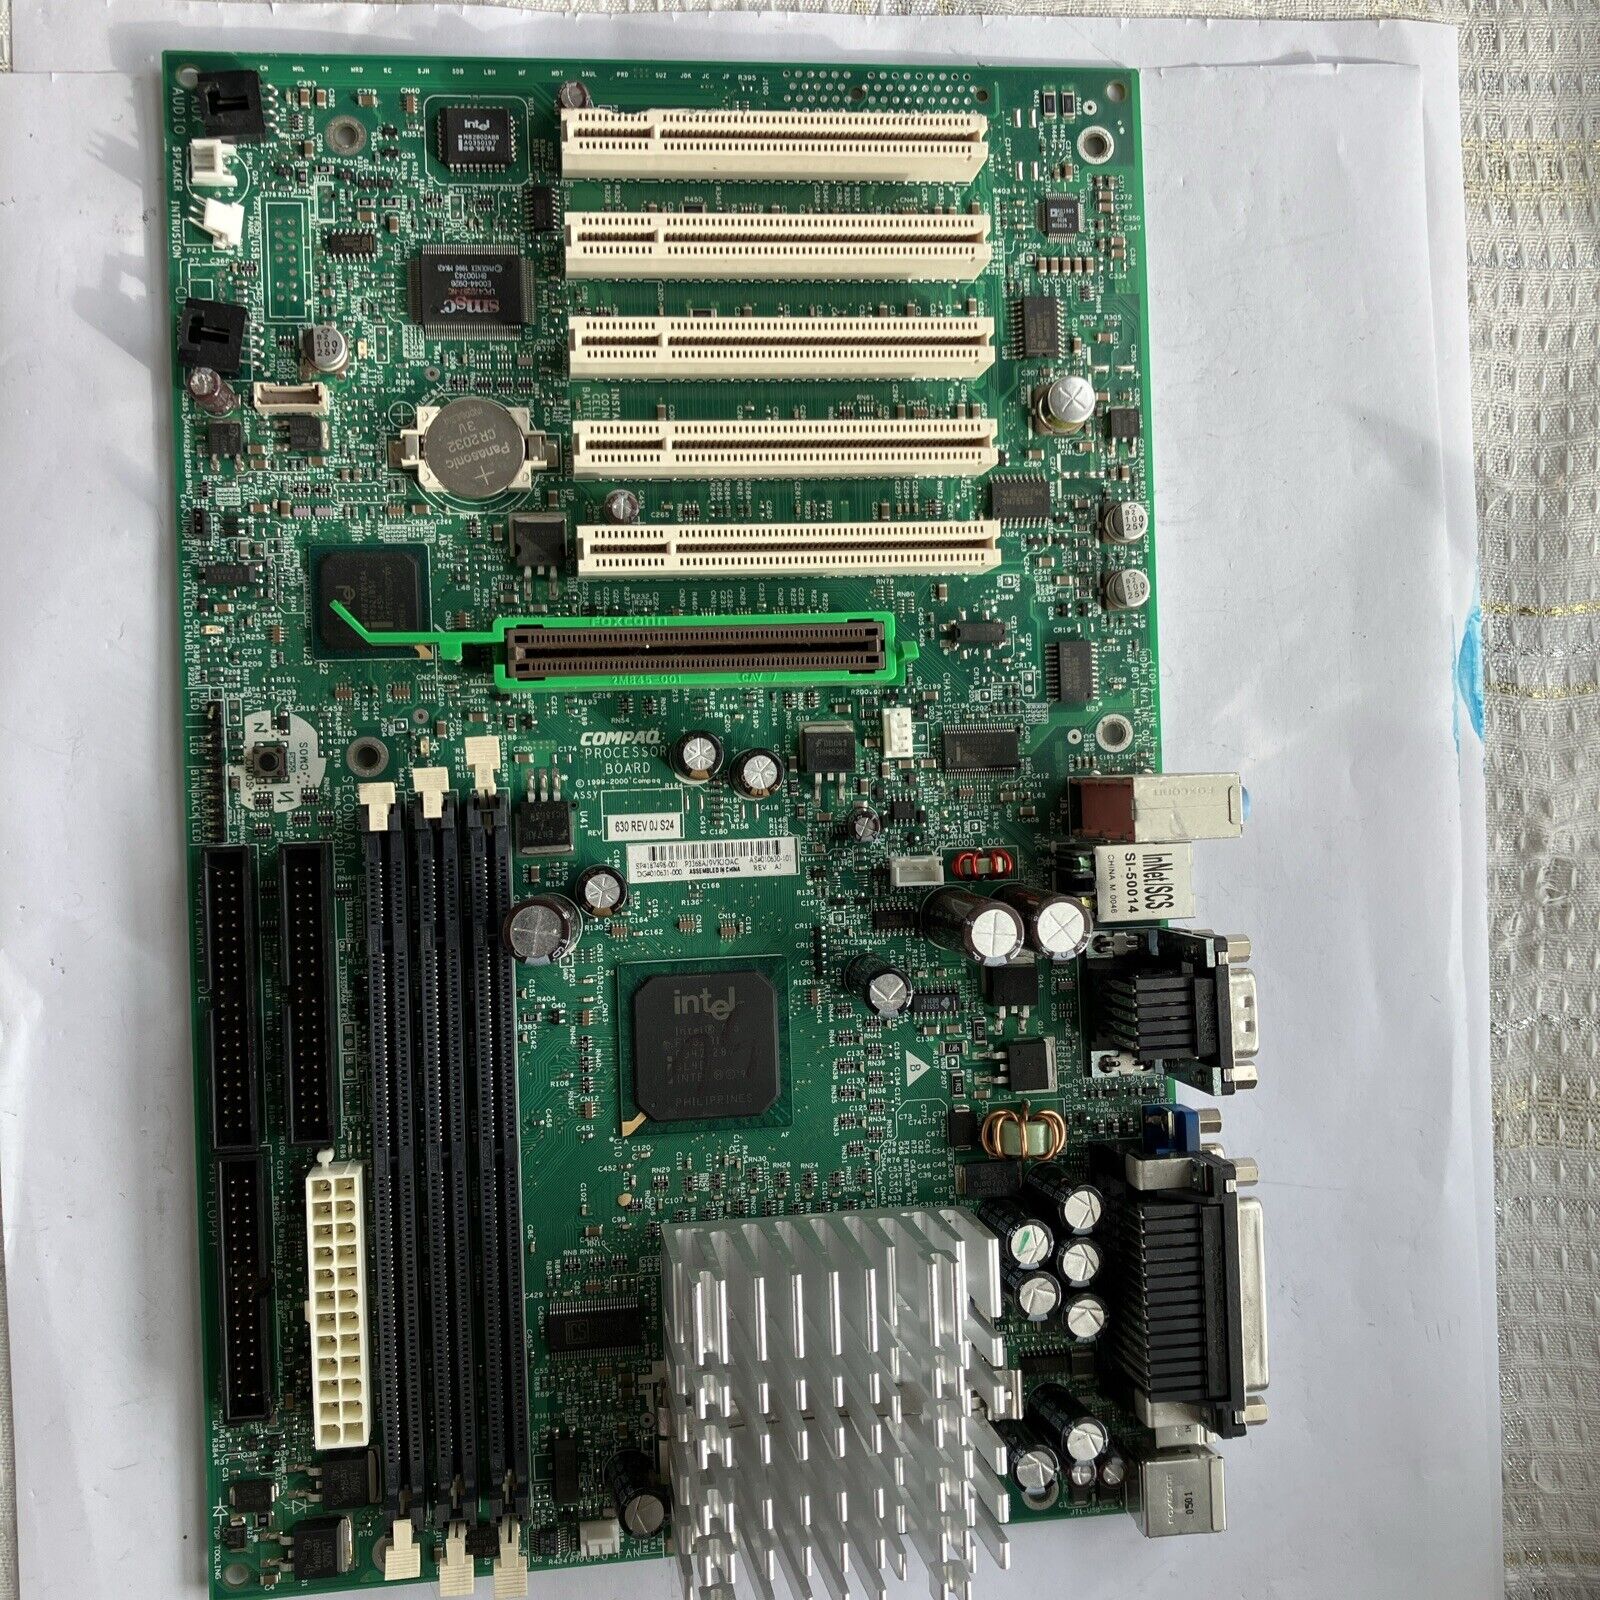 Motherboard Compaq 630 Rev OJ S24 Pentium III processor￼ vintage computer See Pi